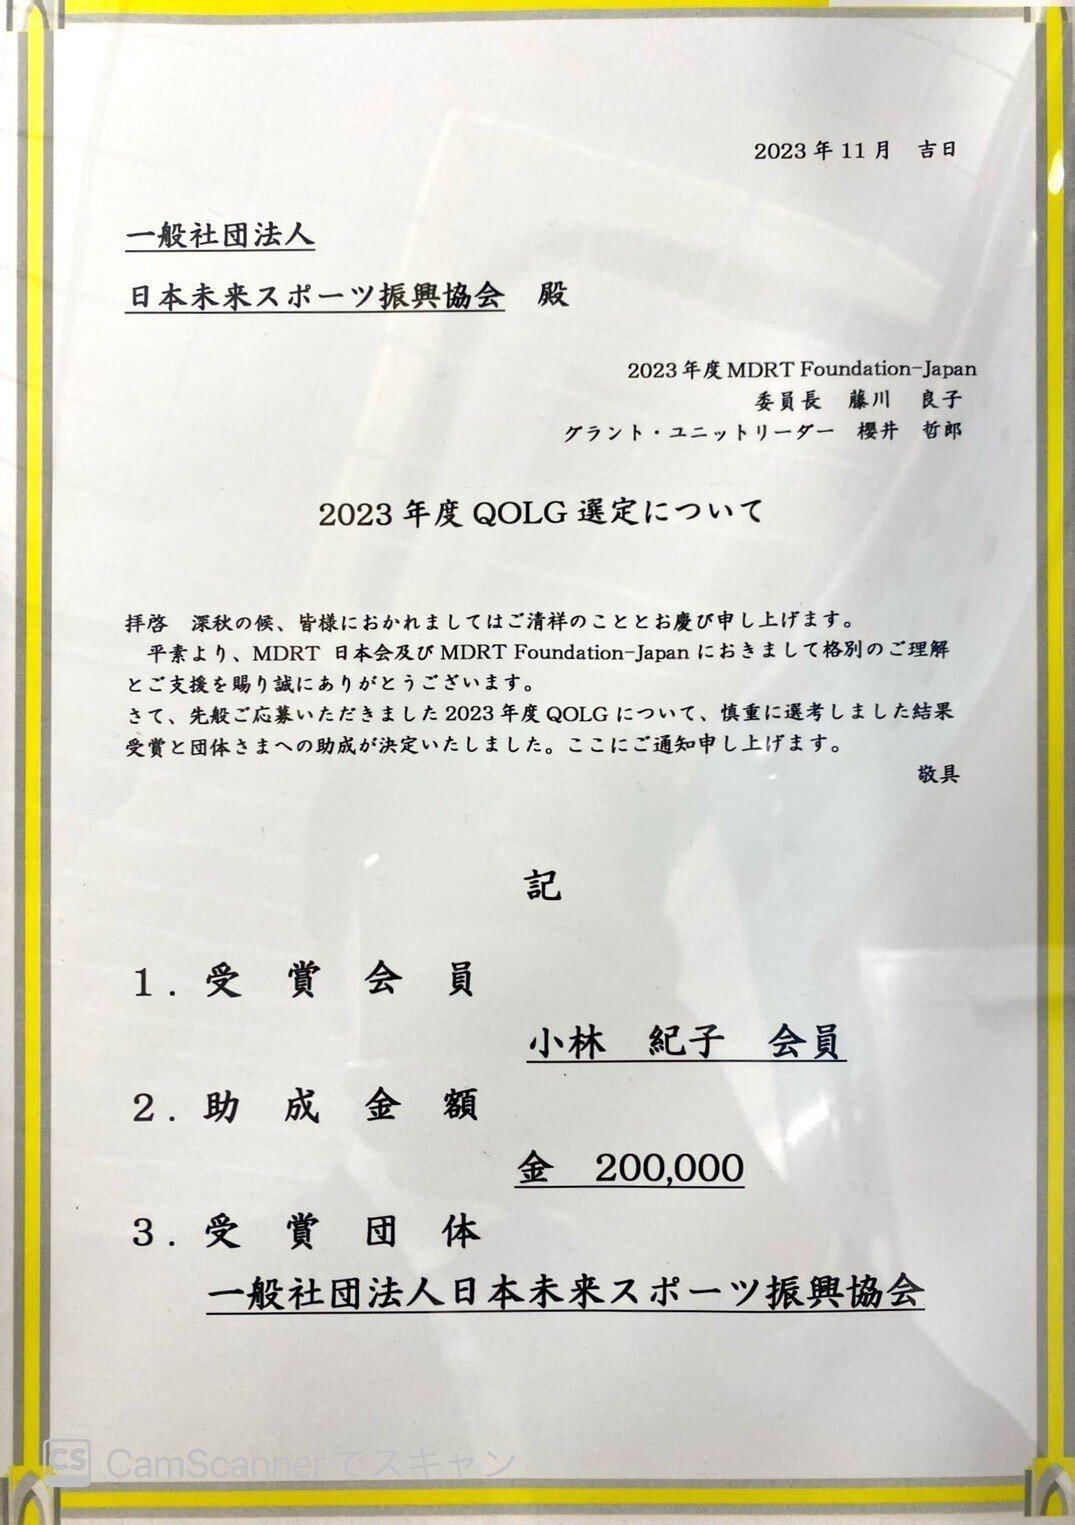 【MDRT Foundation-Japan】2023年度QOLG受賞と助成が決定しました✨